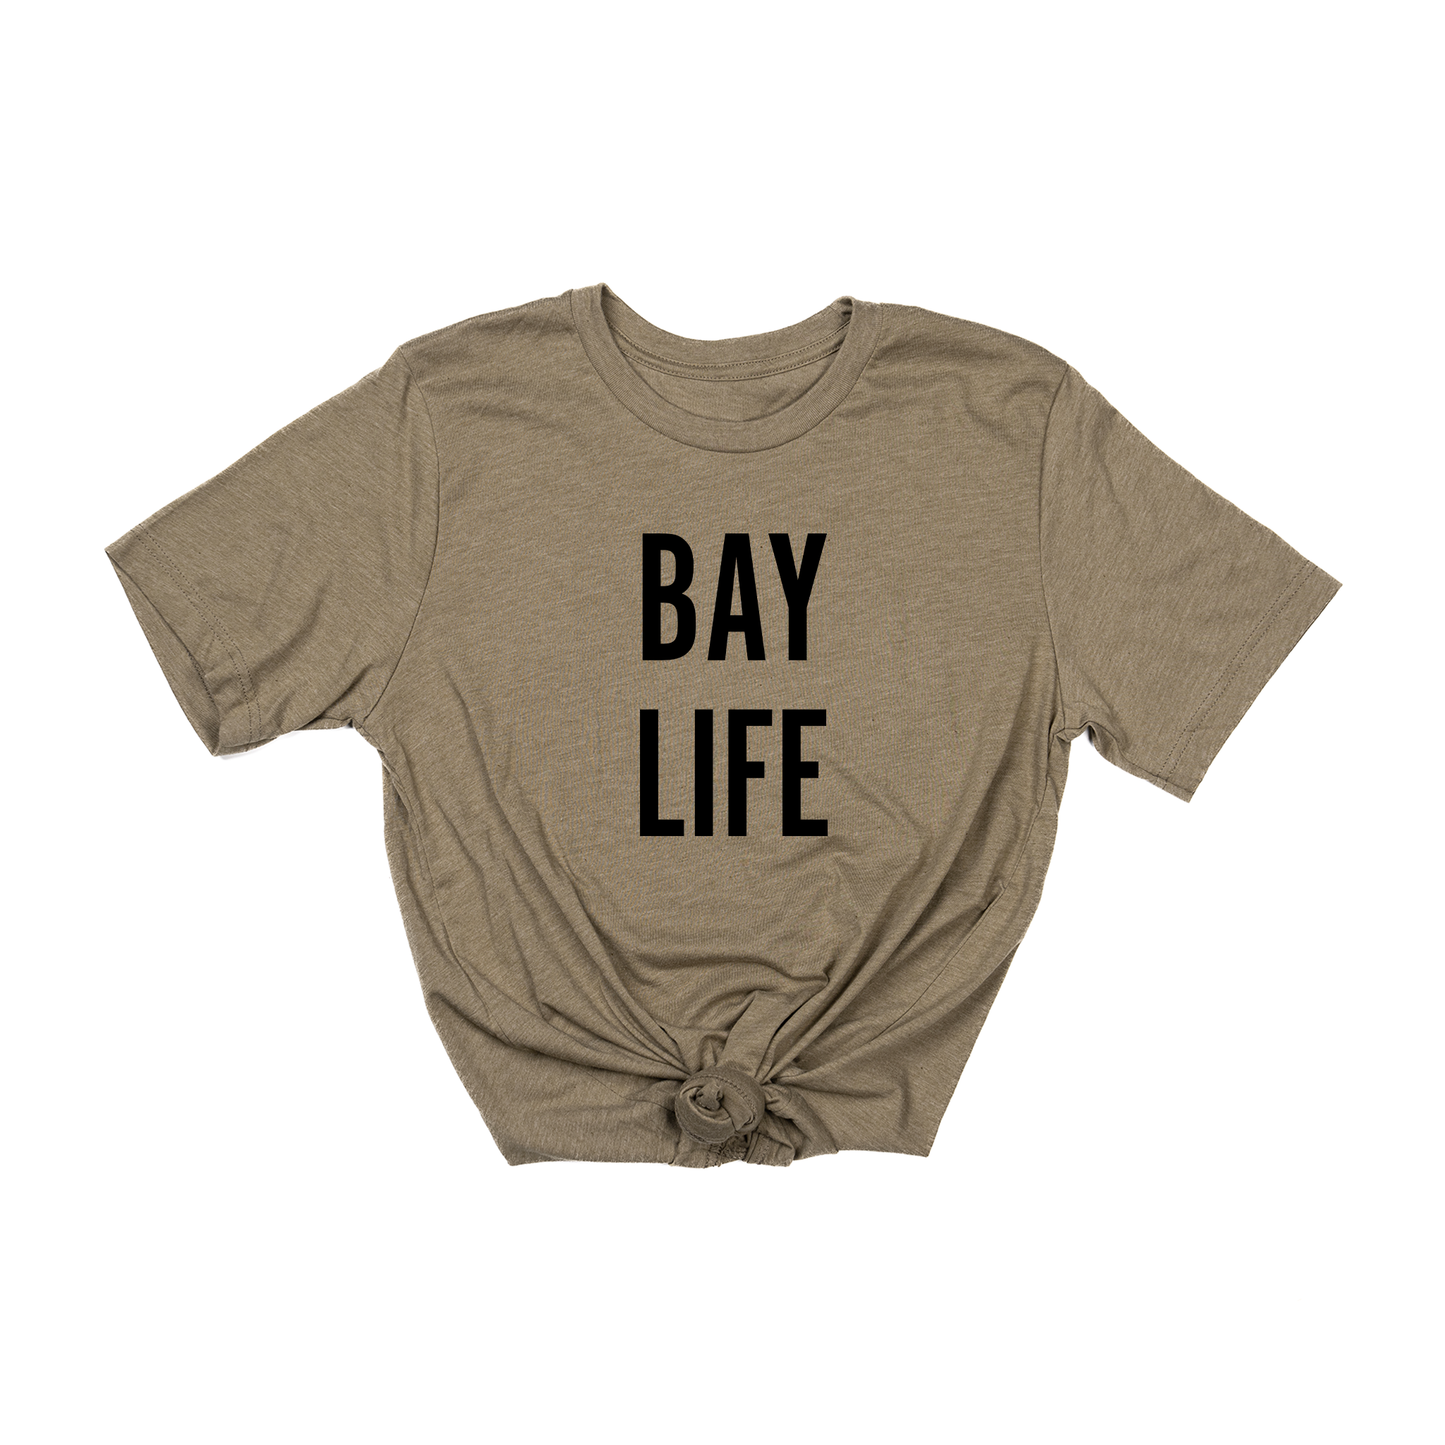 Bay Life (Black) - Tee (Olive)